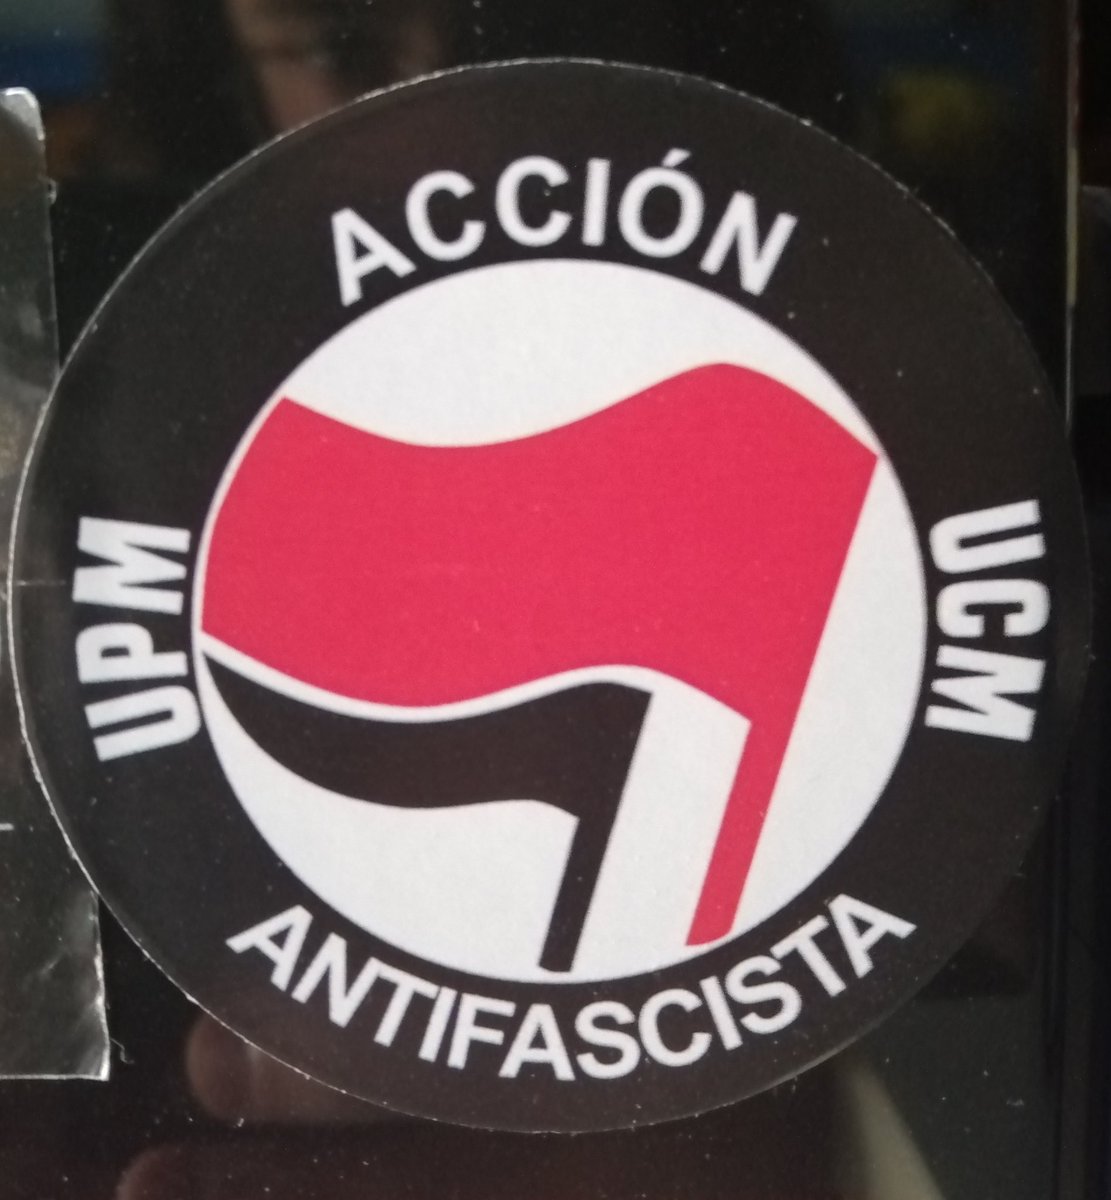 #IAmAntifa
#Acciónantifascista